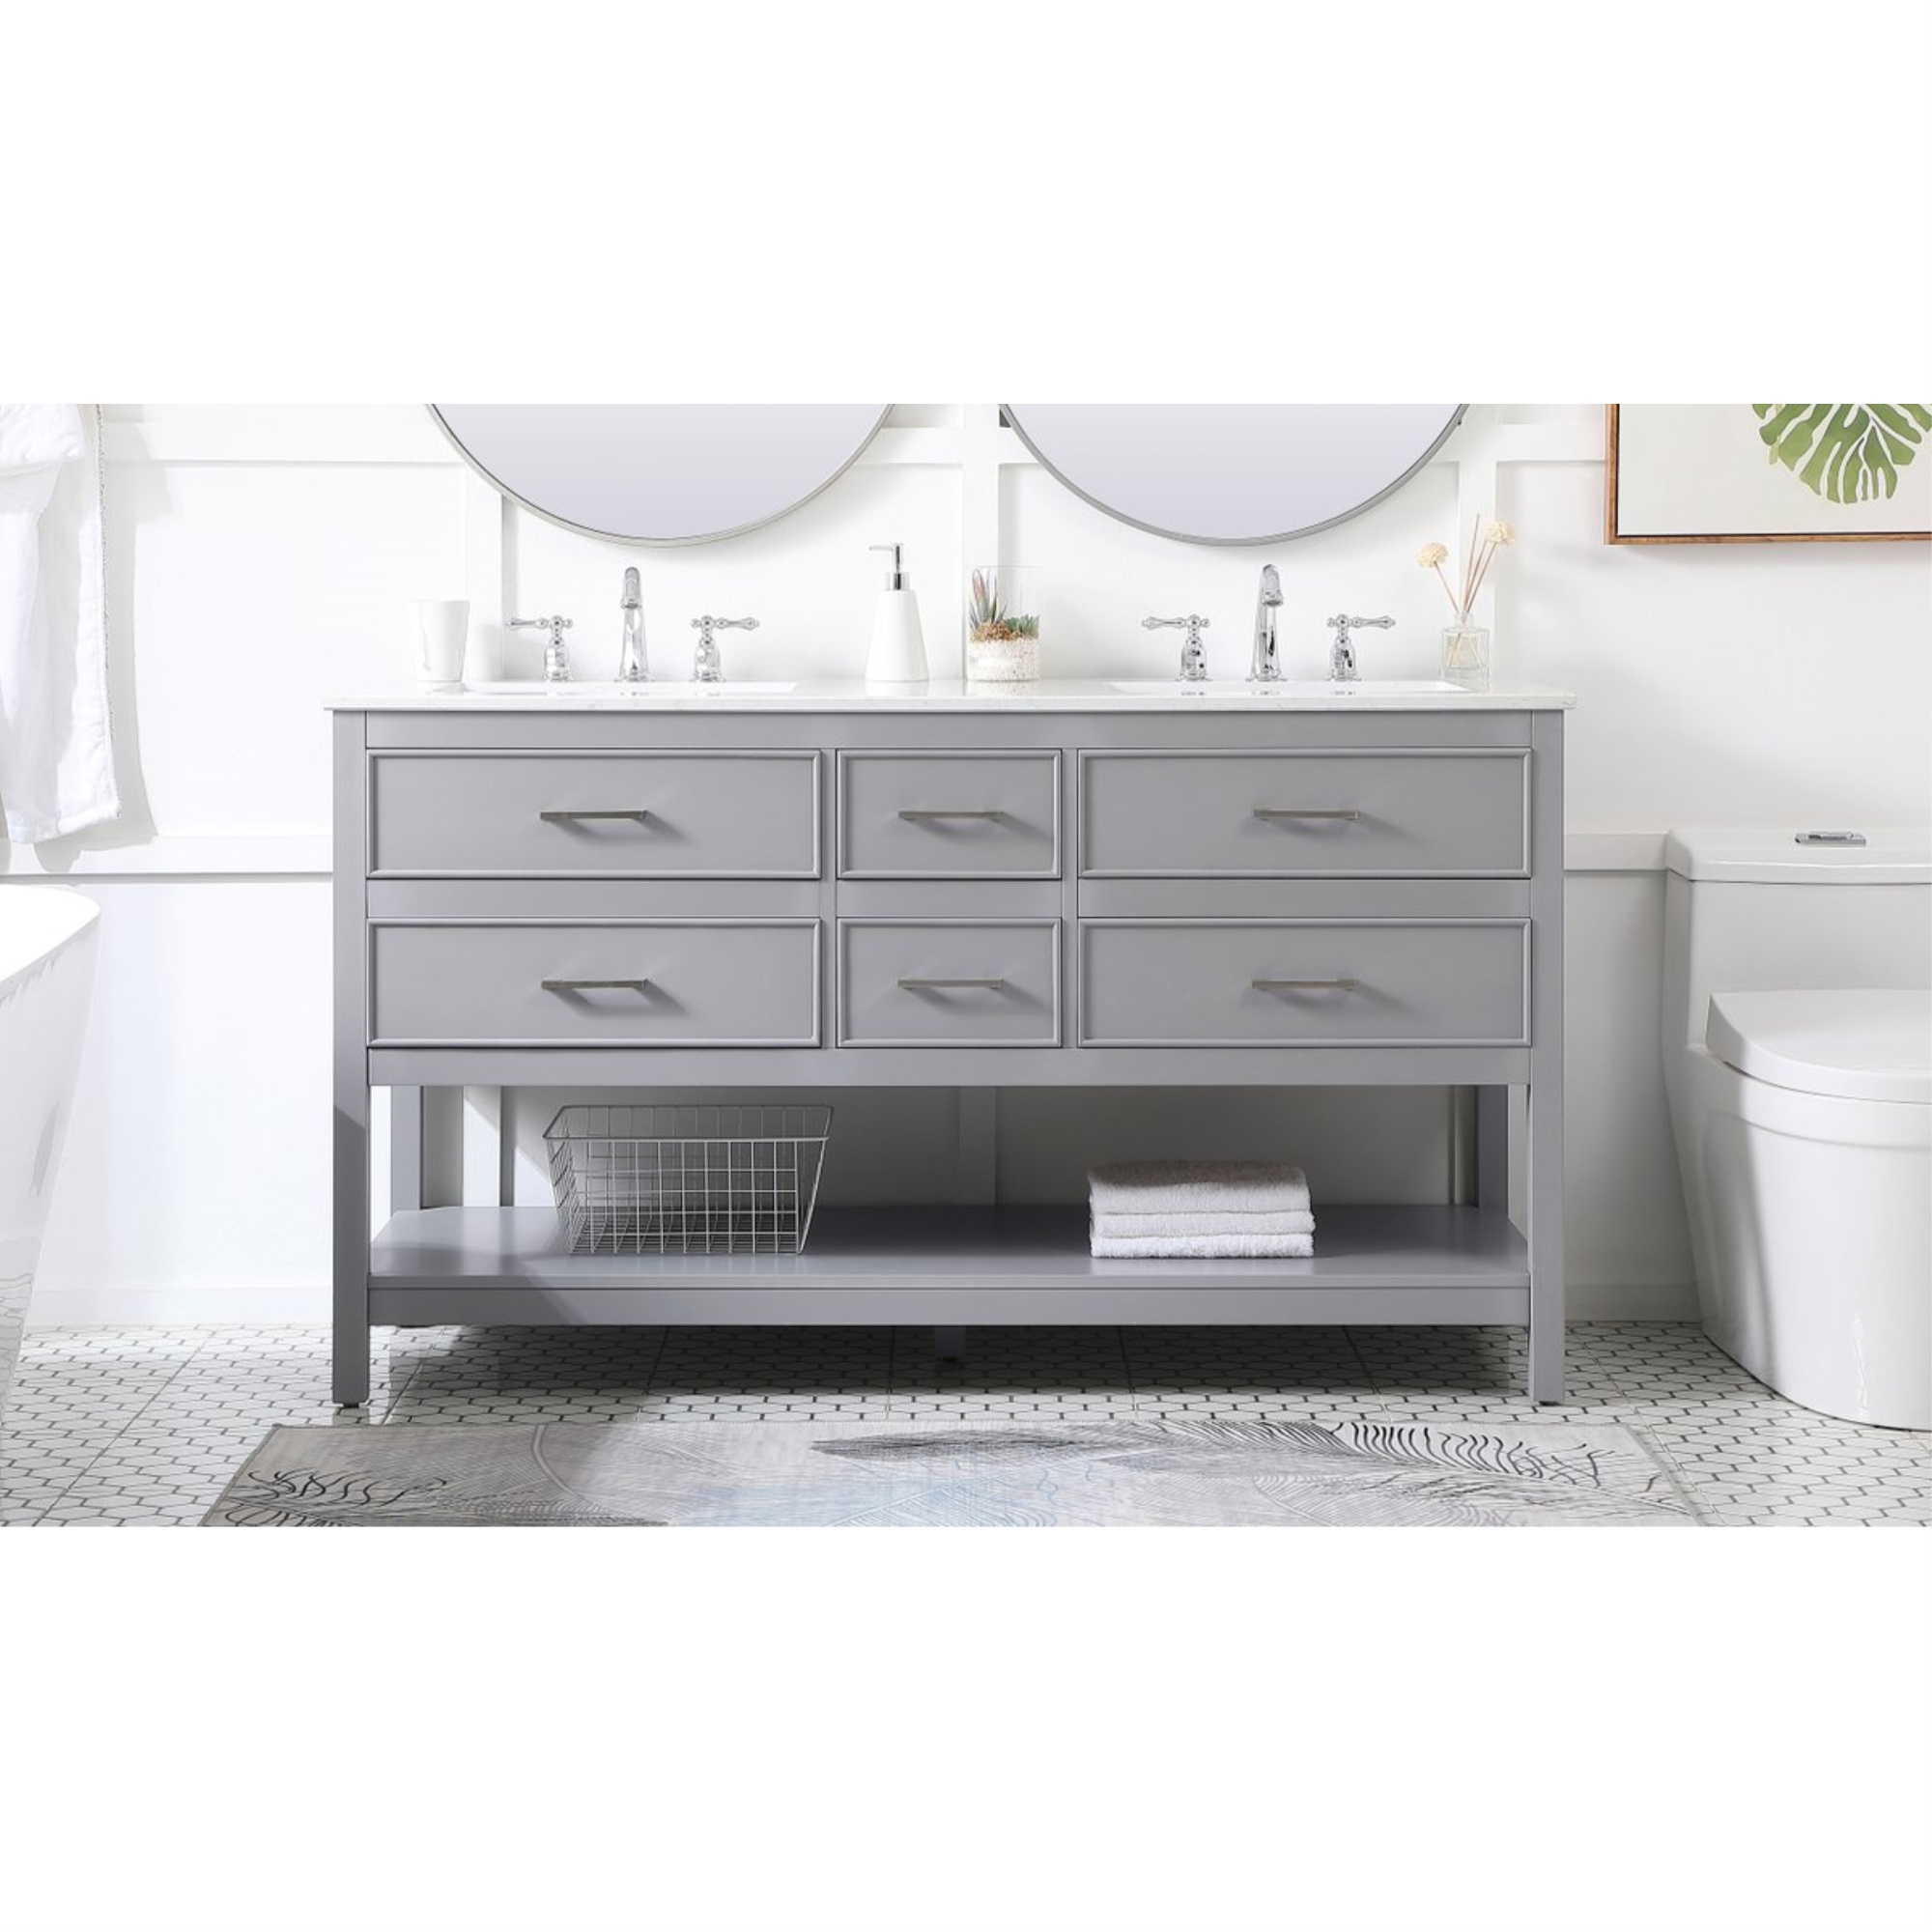 Elegant Decor 60 inch double bathroom vanity in gray